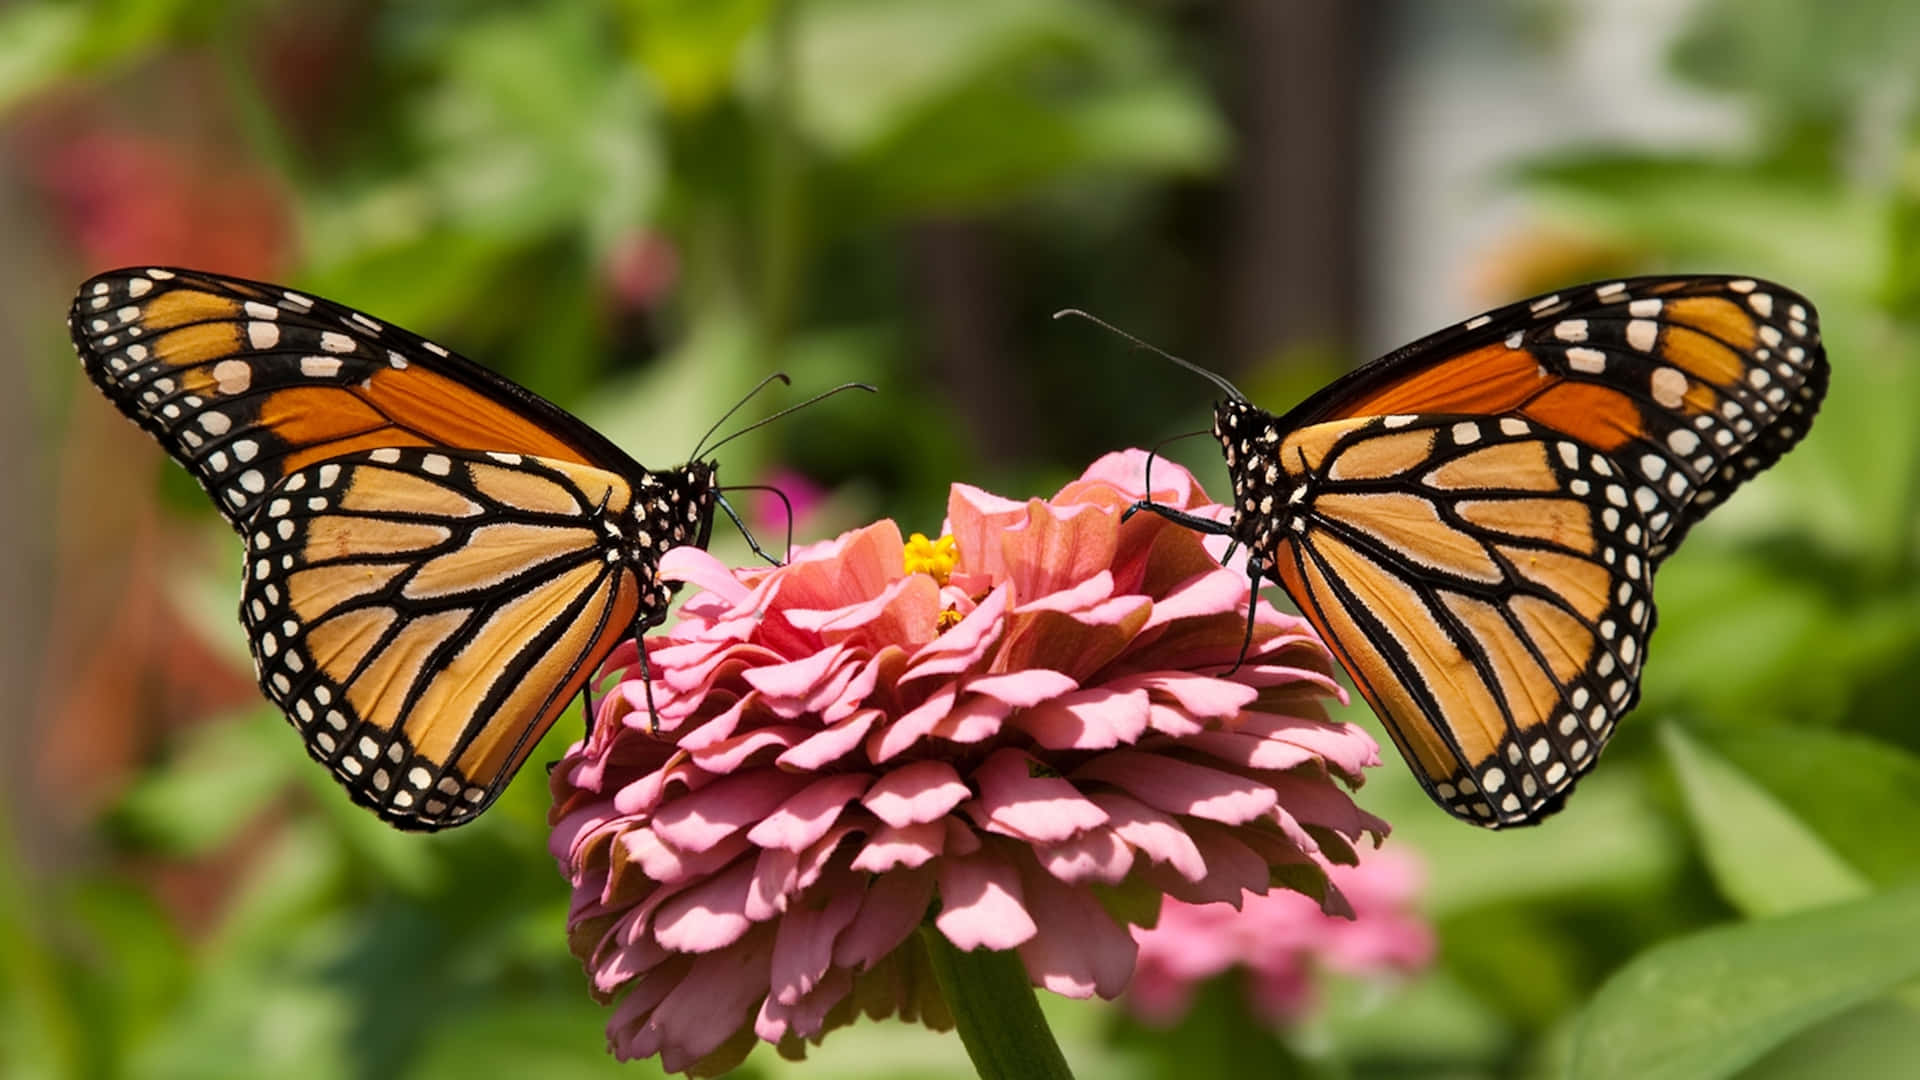 "Behold the majestic monarch butterfly, fluttering gracefully across the meadow."